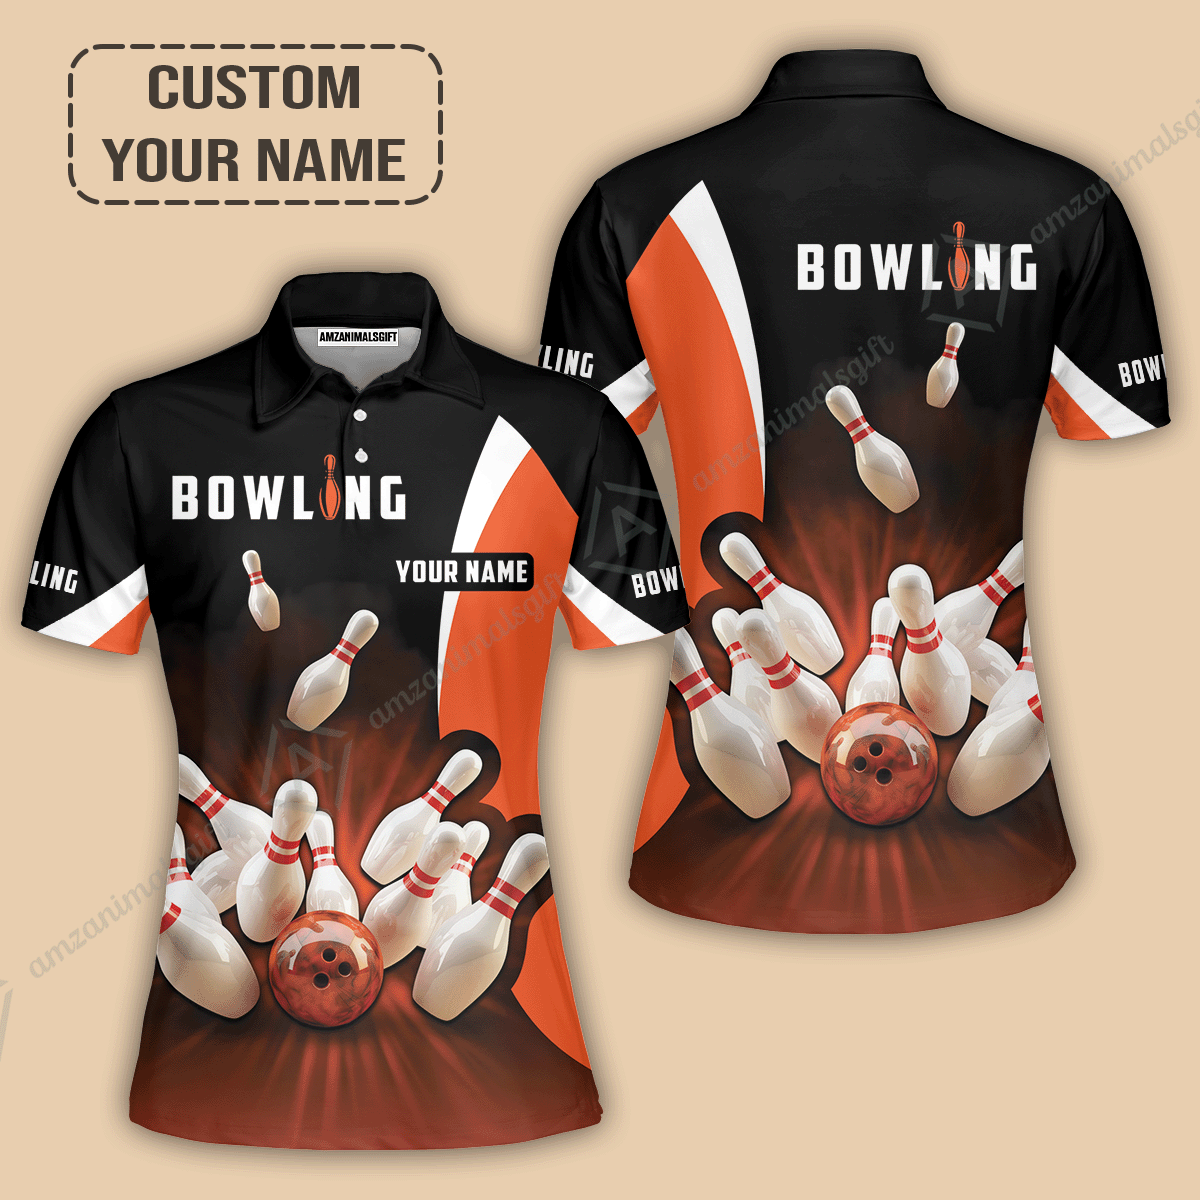 Customized Bowling Women Polo Shirt, Ten Pin Strike Bowling Personalized Orange Black Shirt For Friend, Family, Bowling Players